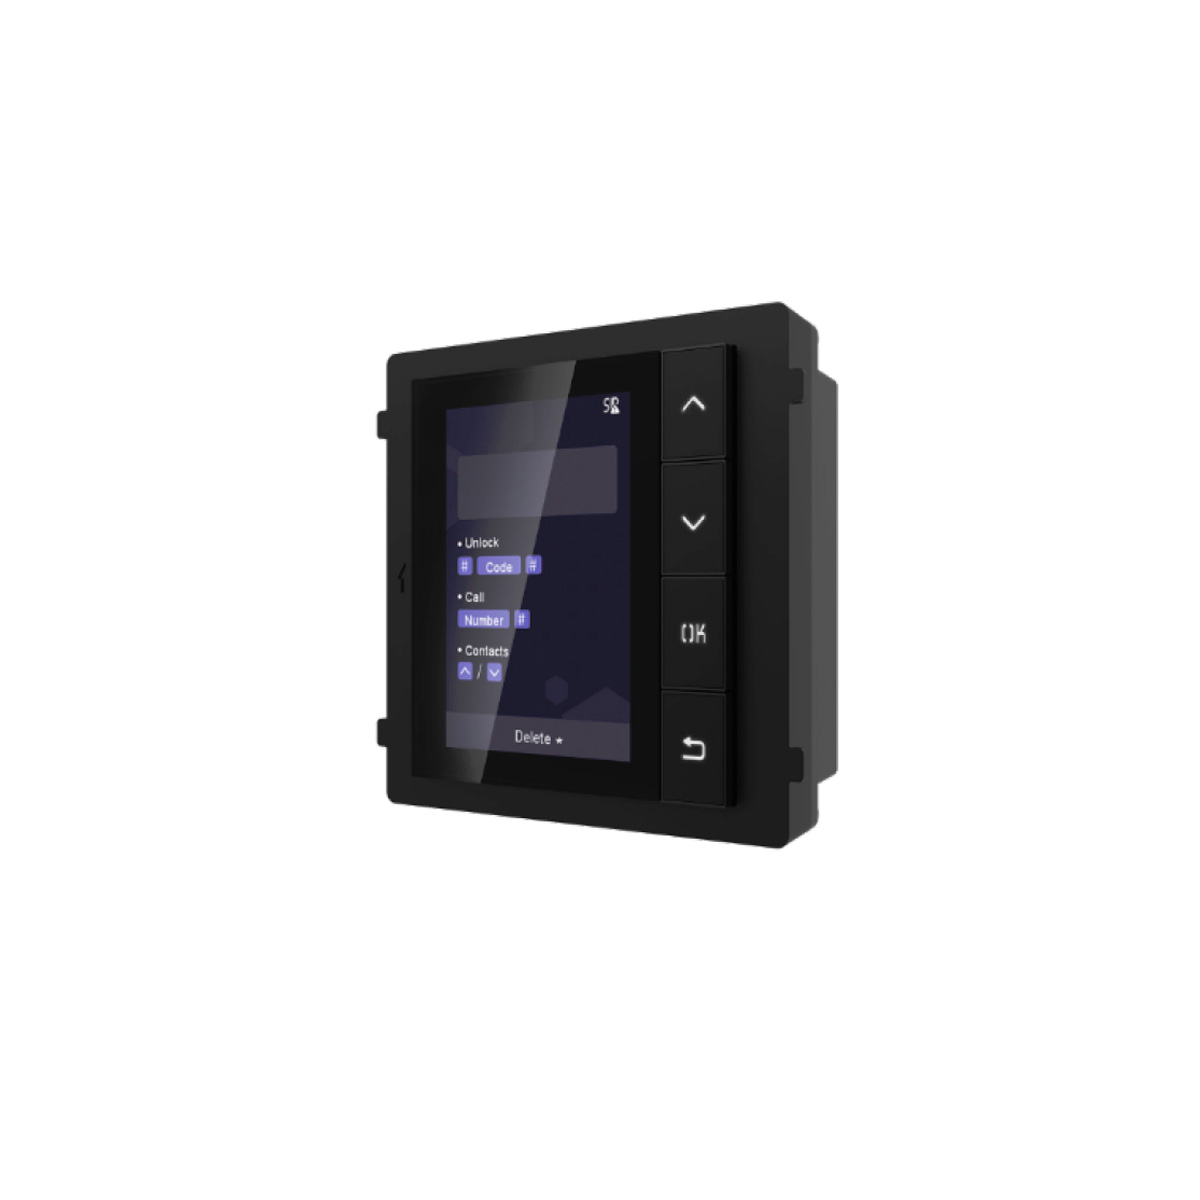 Modulo Pantalla Hikvision DS-KD-DIS para Videoportero Modular